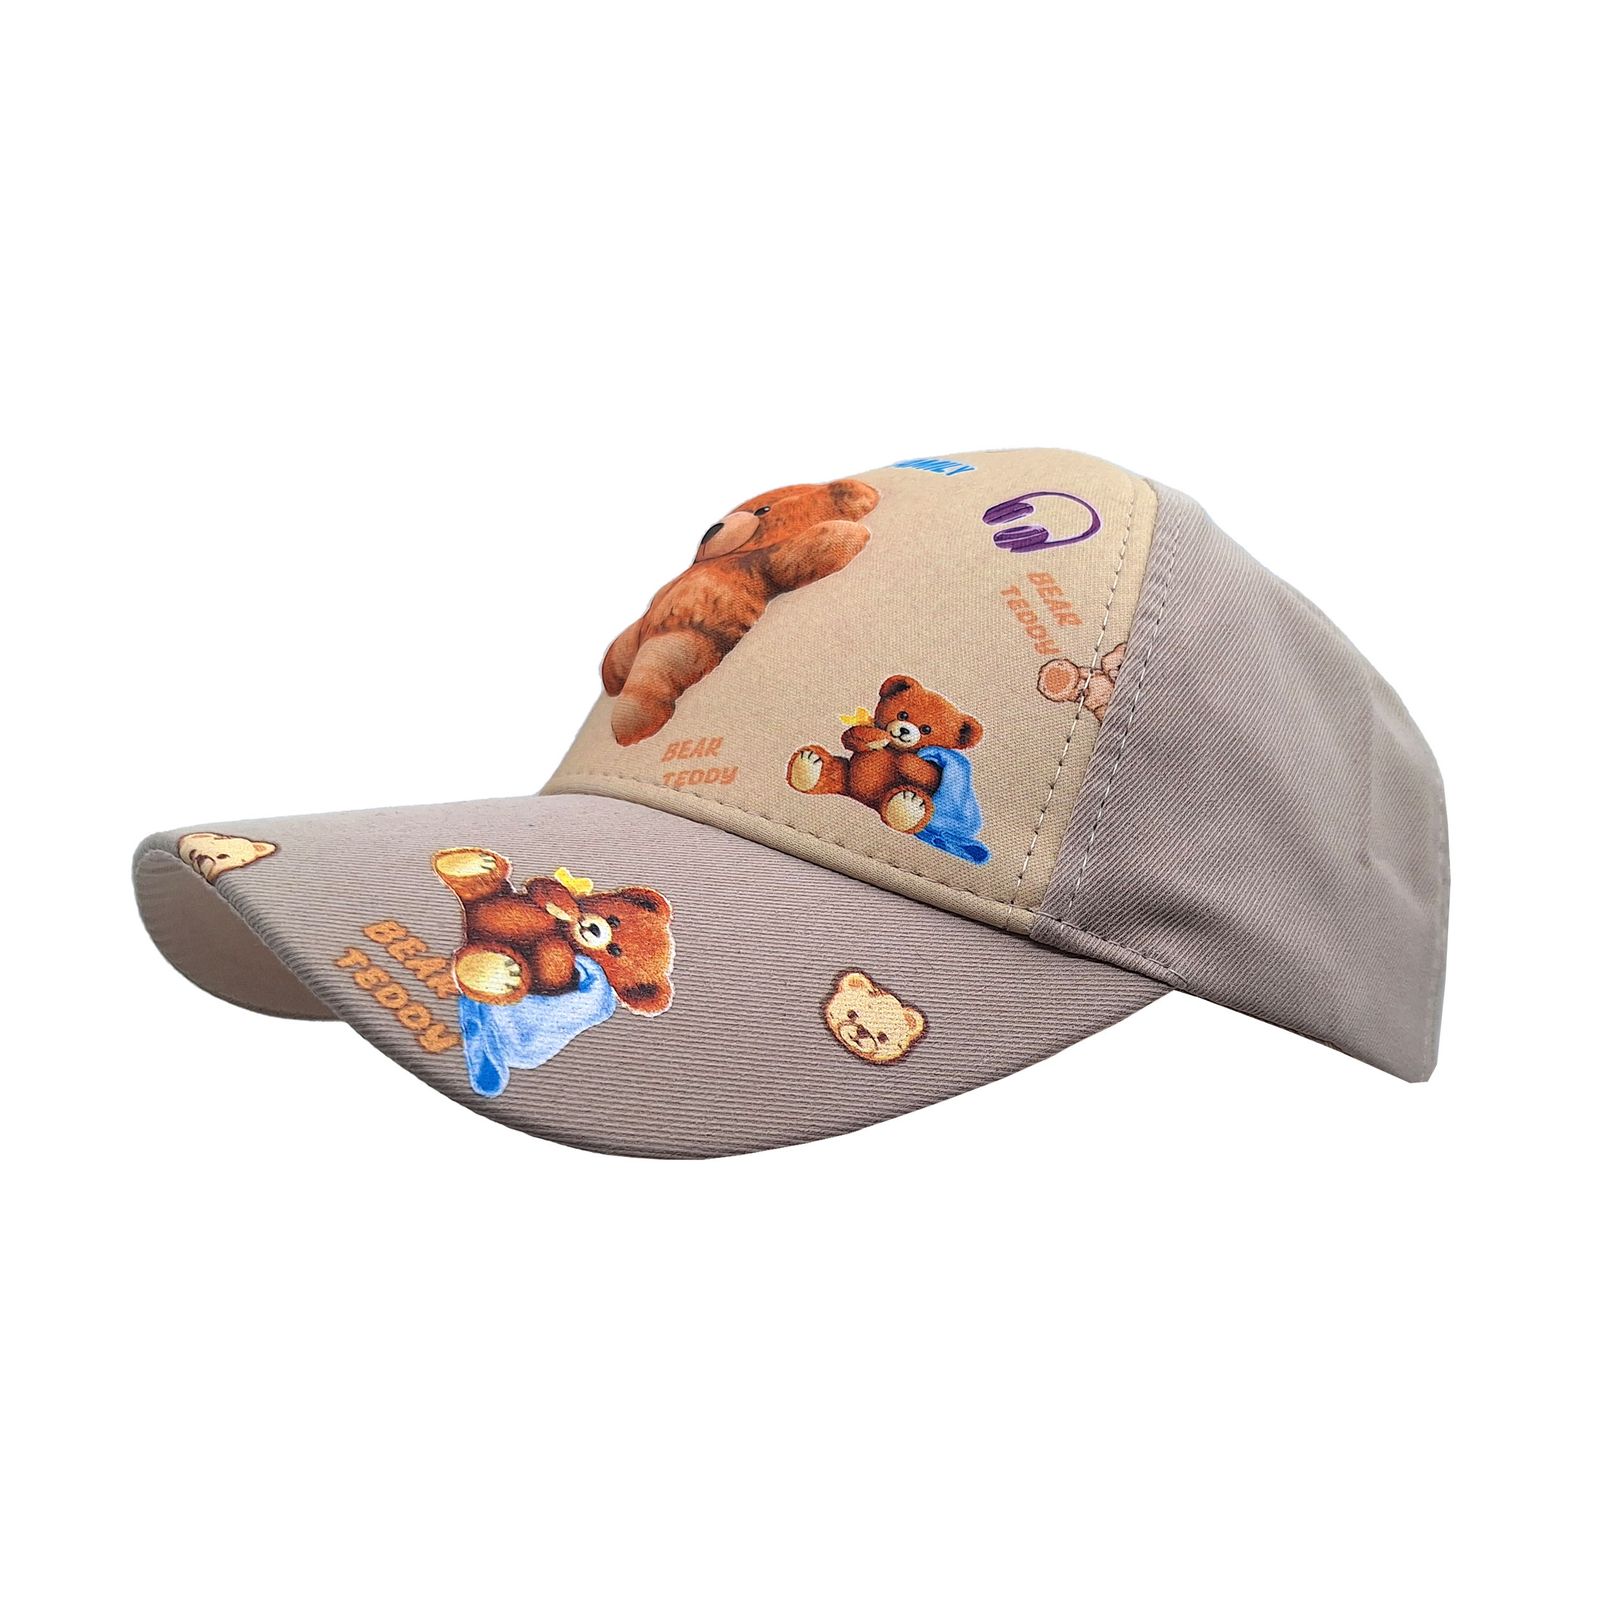  کلاه کپ پسرانه مدل خرس برجسته کد 1143 رنگ کرم  -  - 3